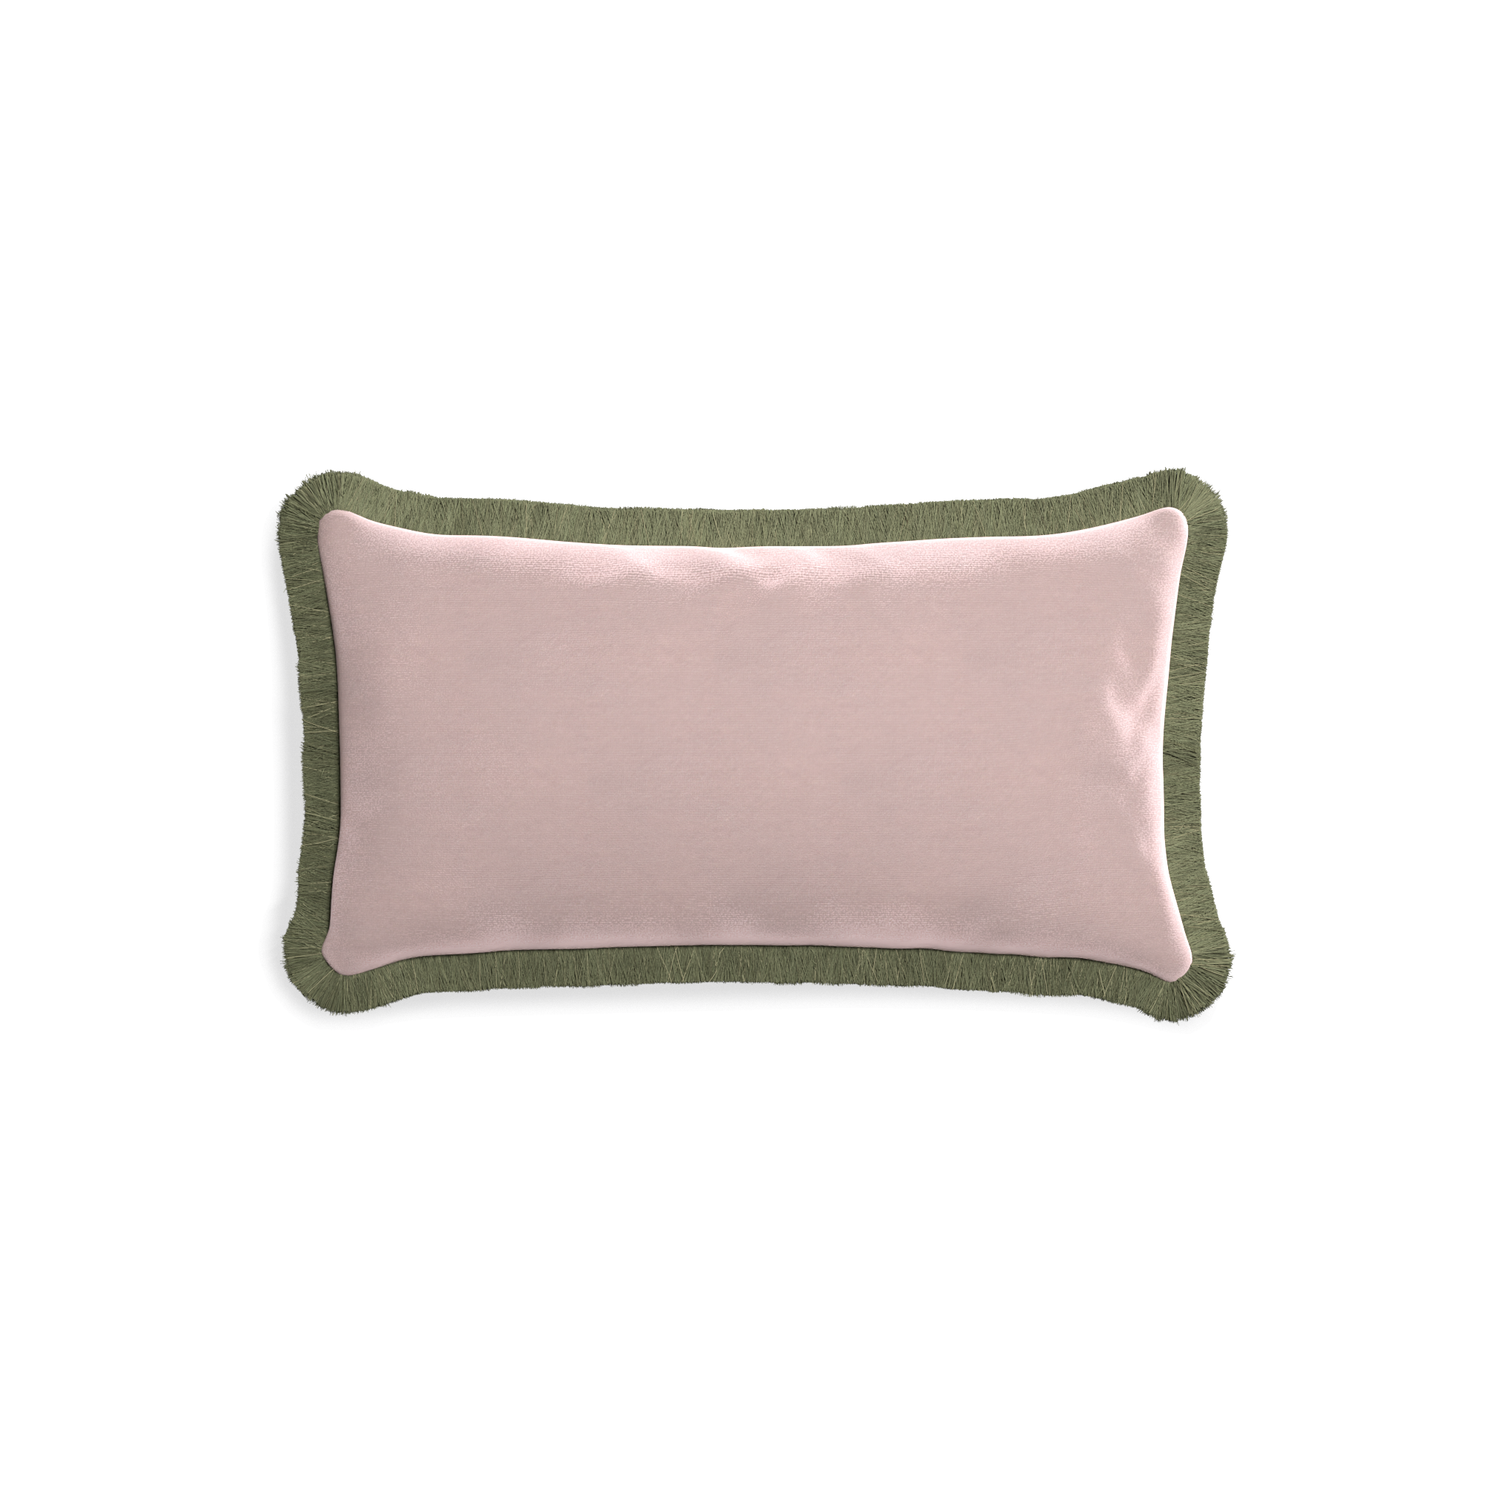 rectangle light pink velvet pillow with sage green fringe